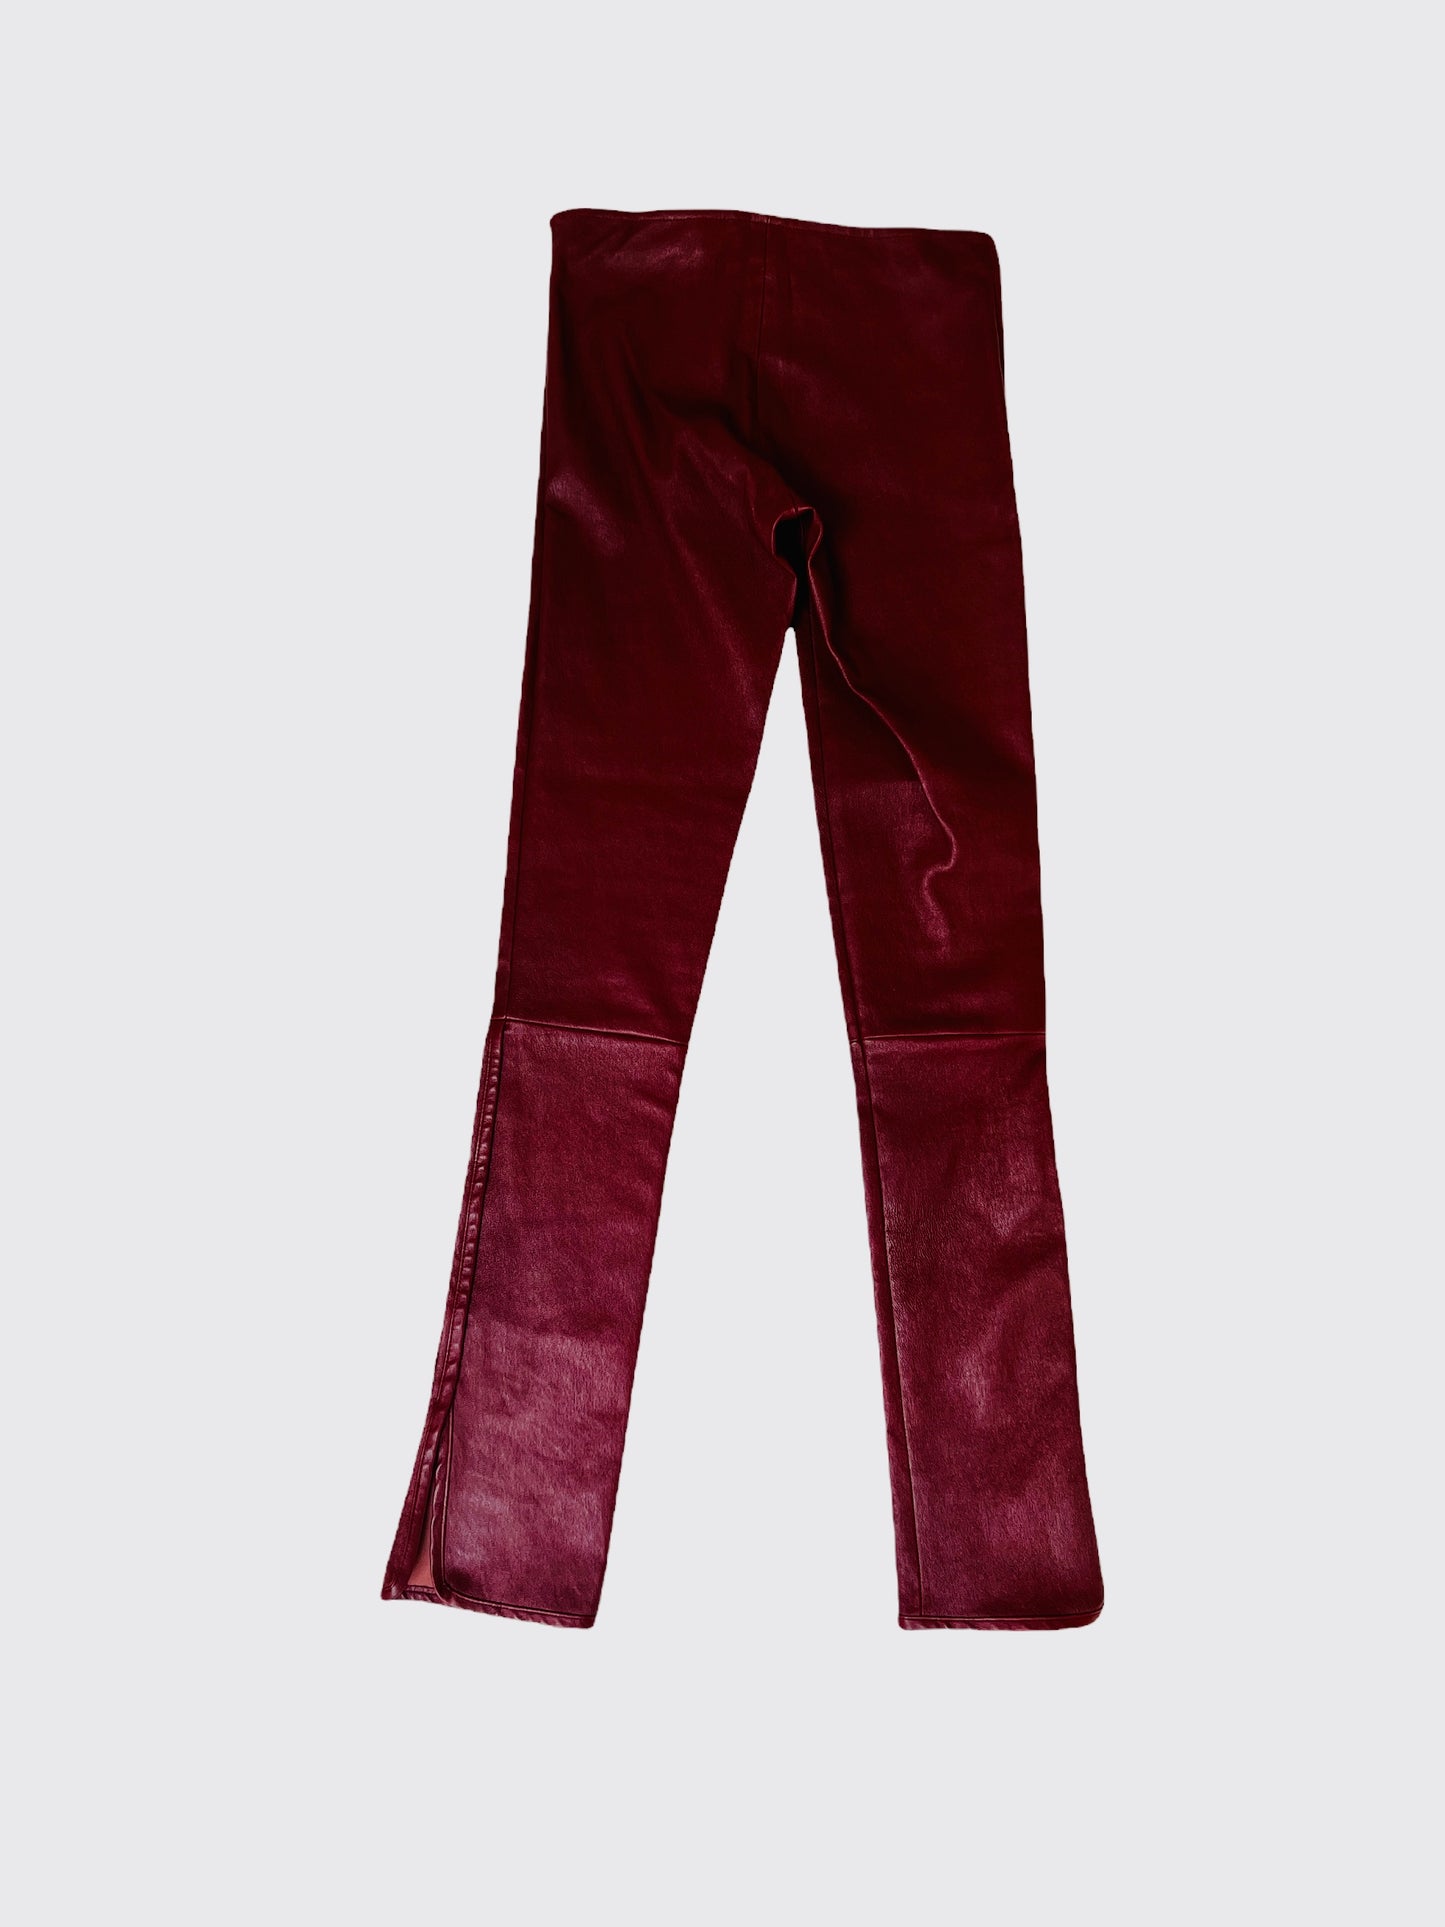 Burgundy Leather Leggings - XS